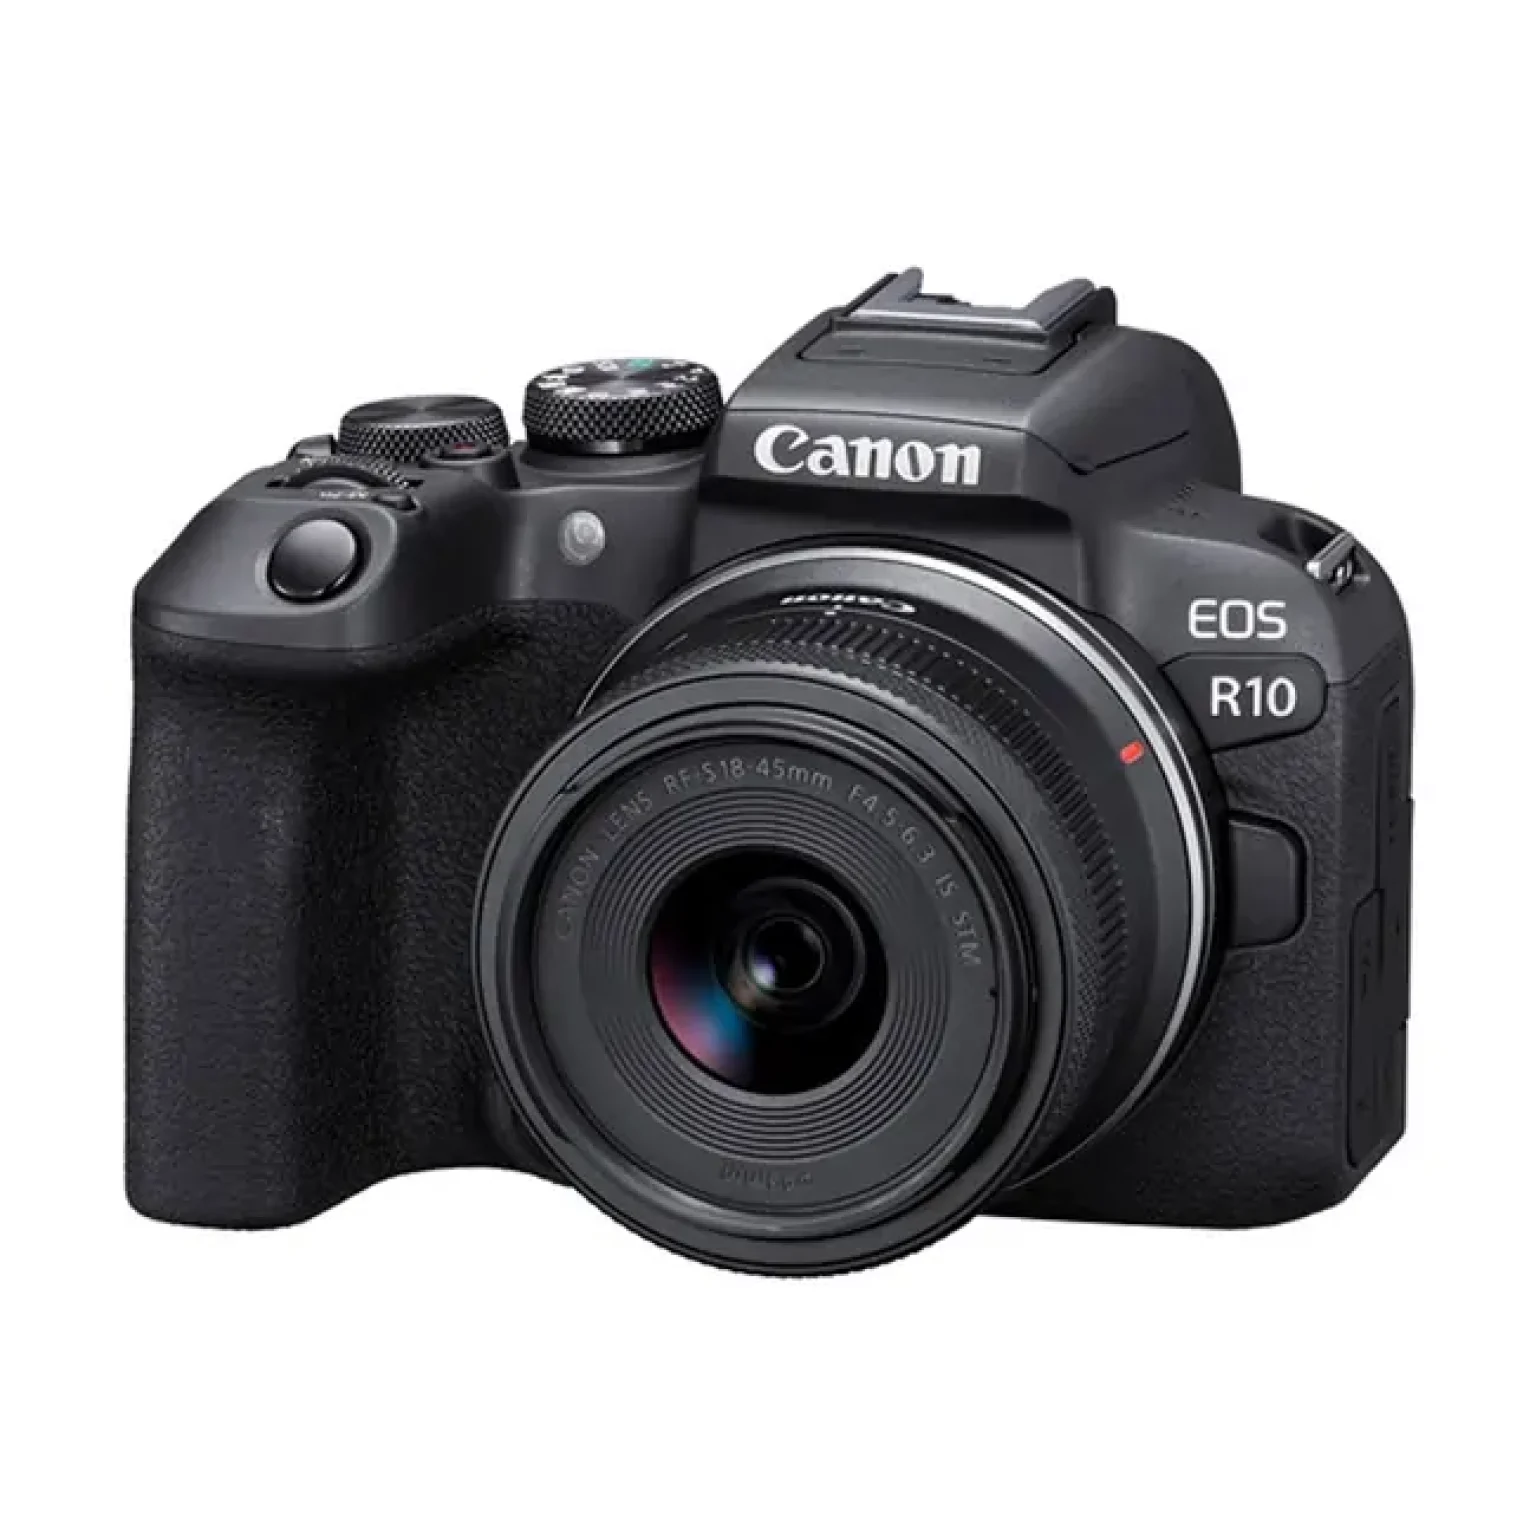 دوربین بدون آینه کانن Canon EOS R10 18-45mm